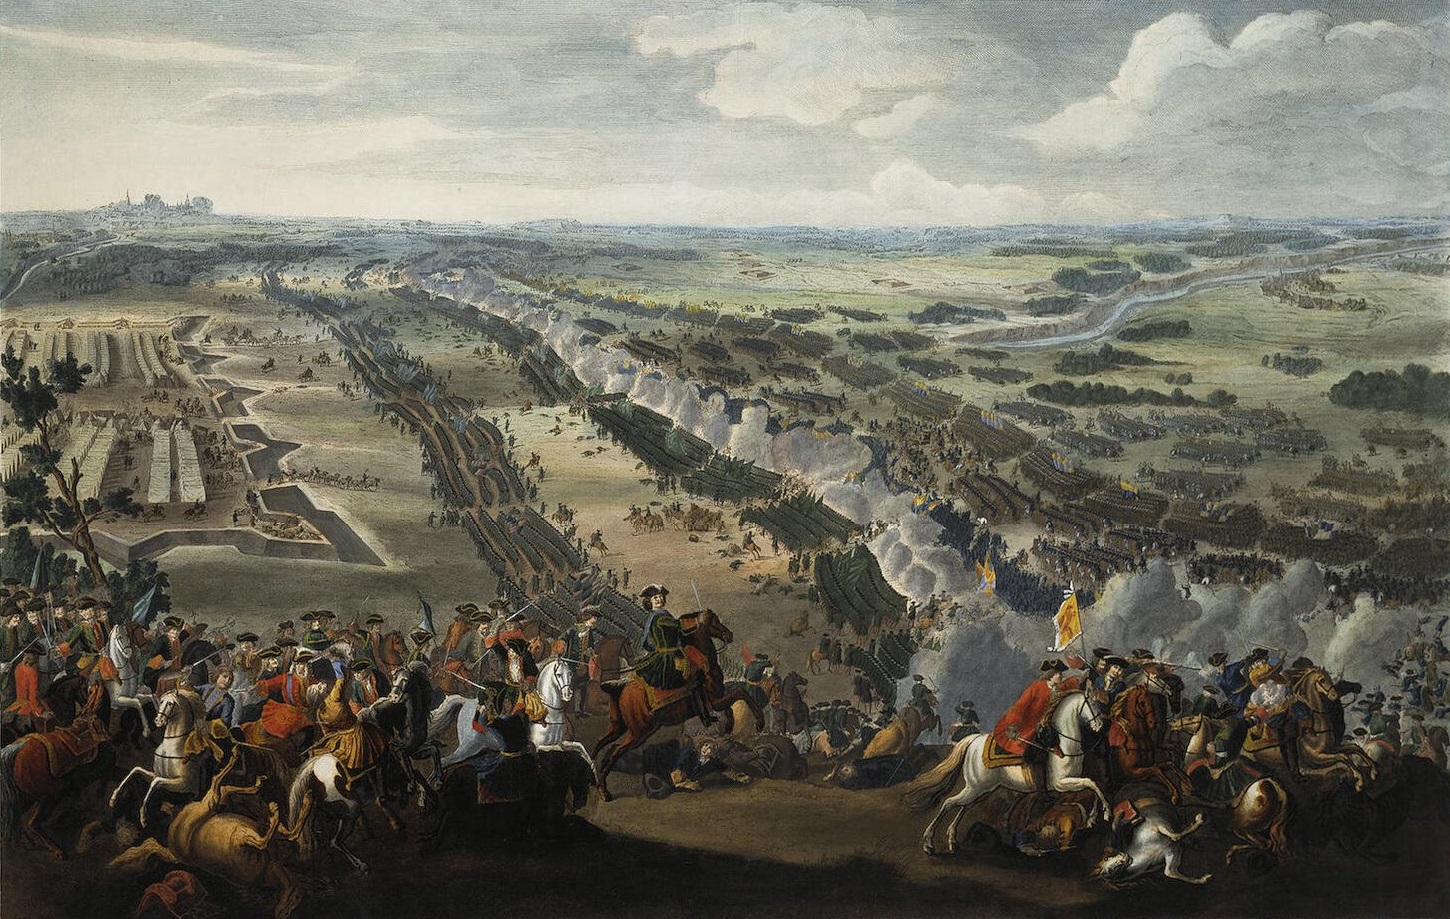 'The Battle of Poltava' by Denis Martens (1726)